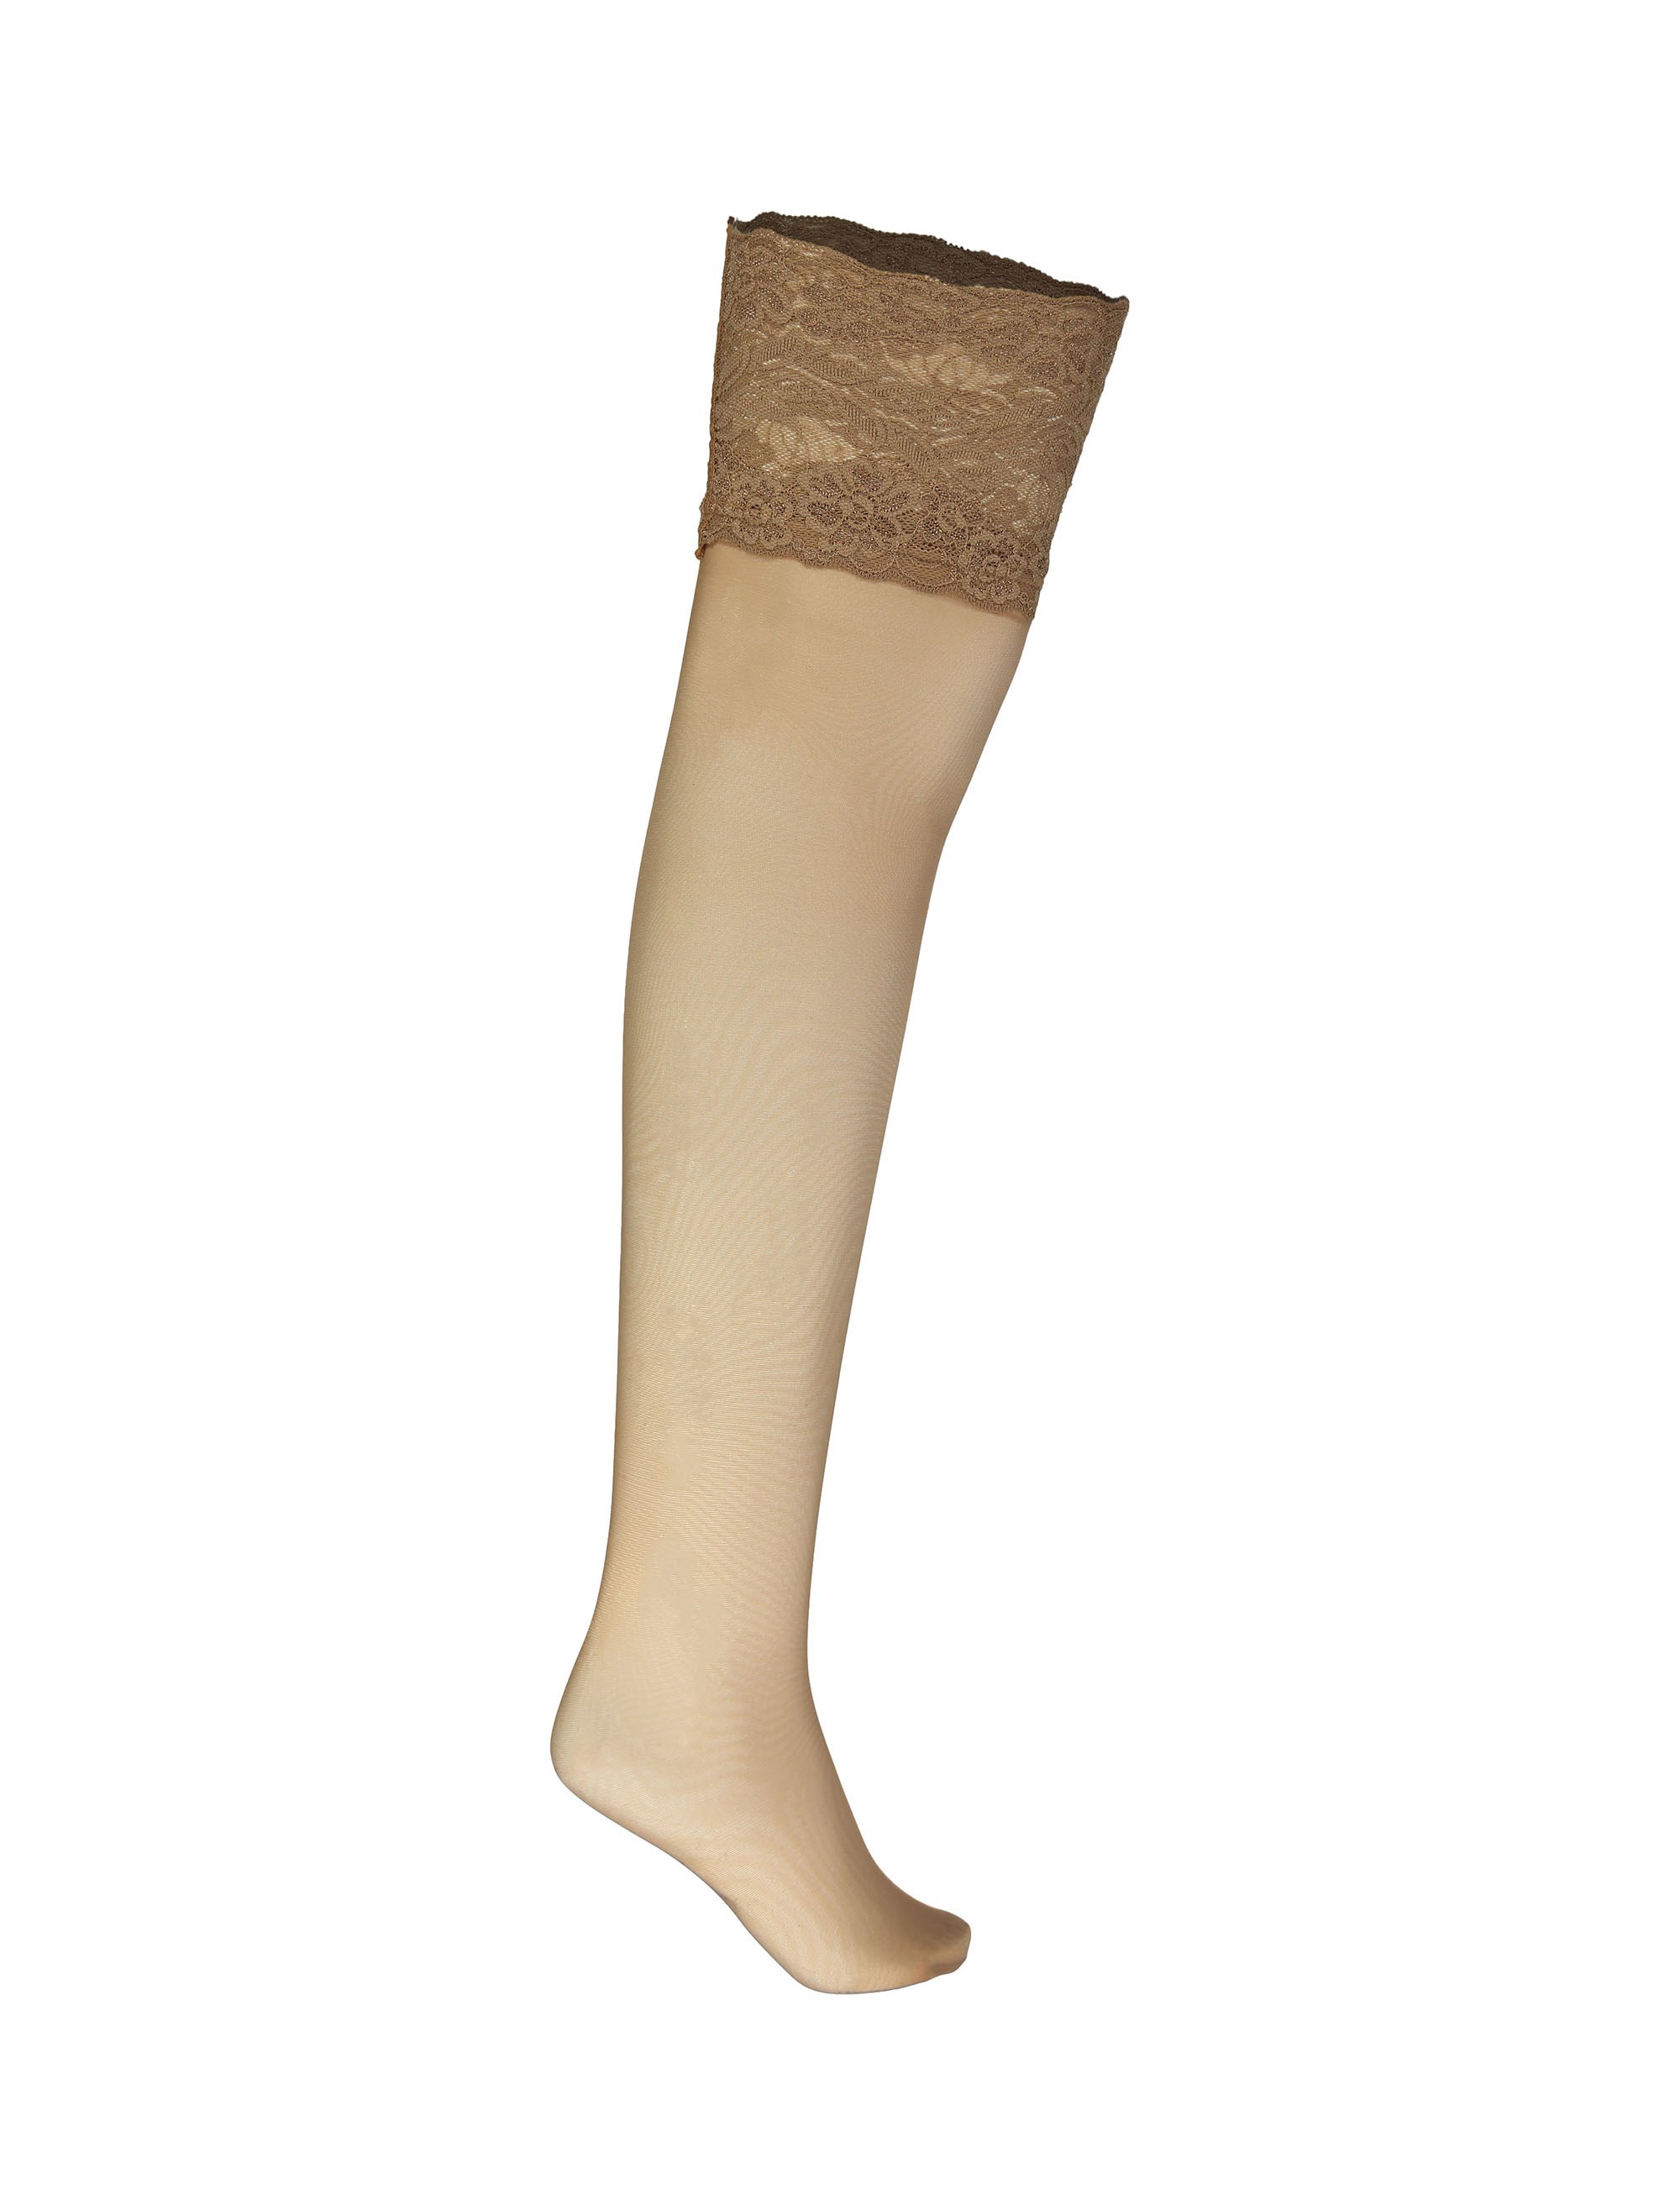 جوراب ساق بلند زنانه - لاوین رز - رنگ پا - 1